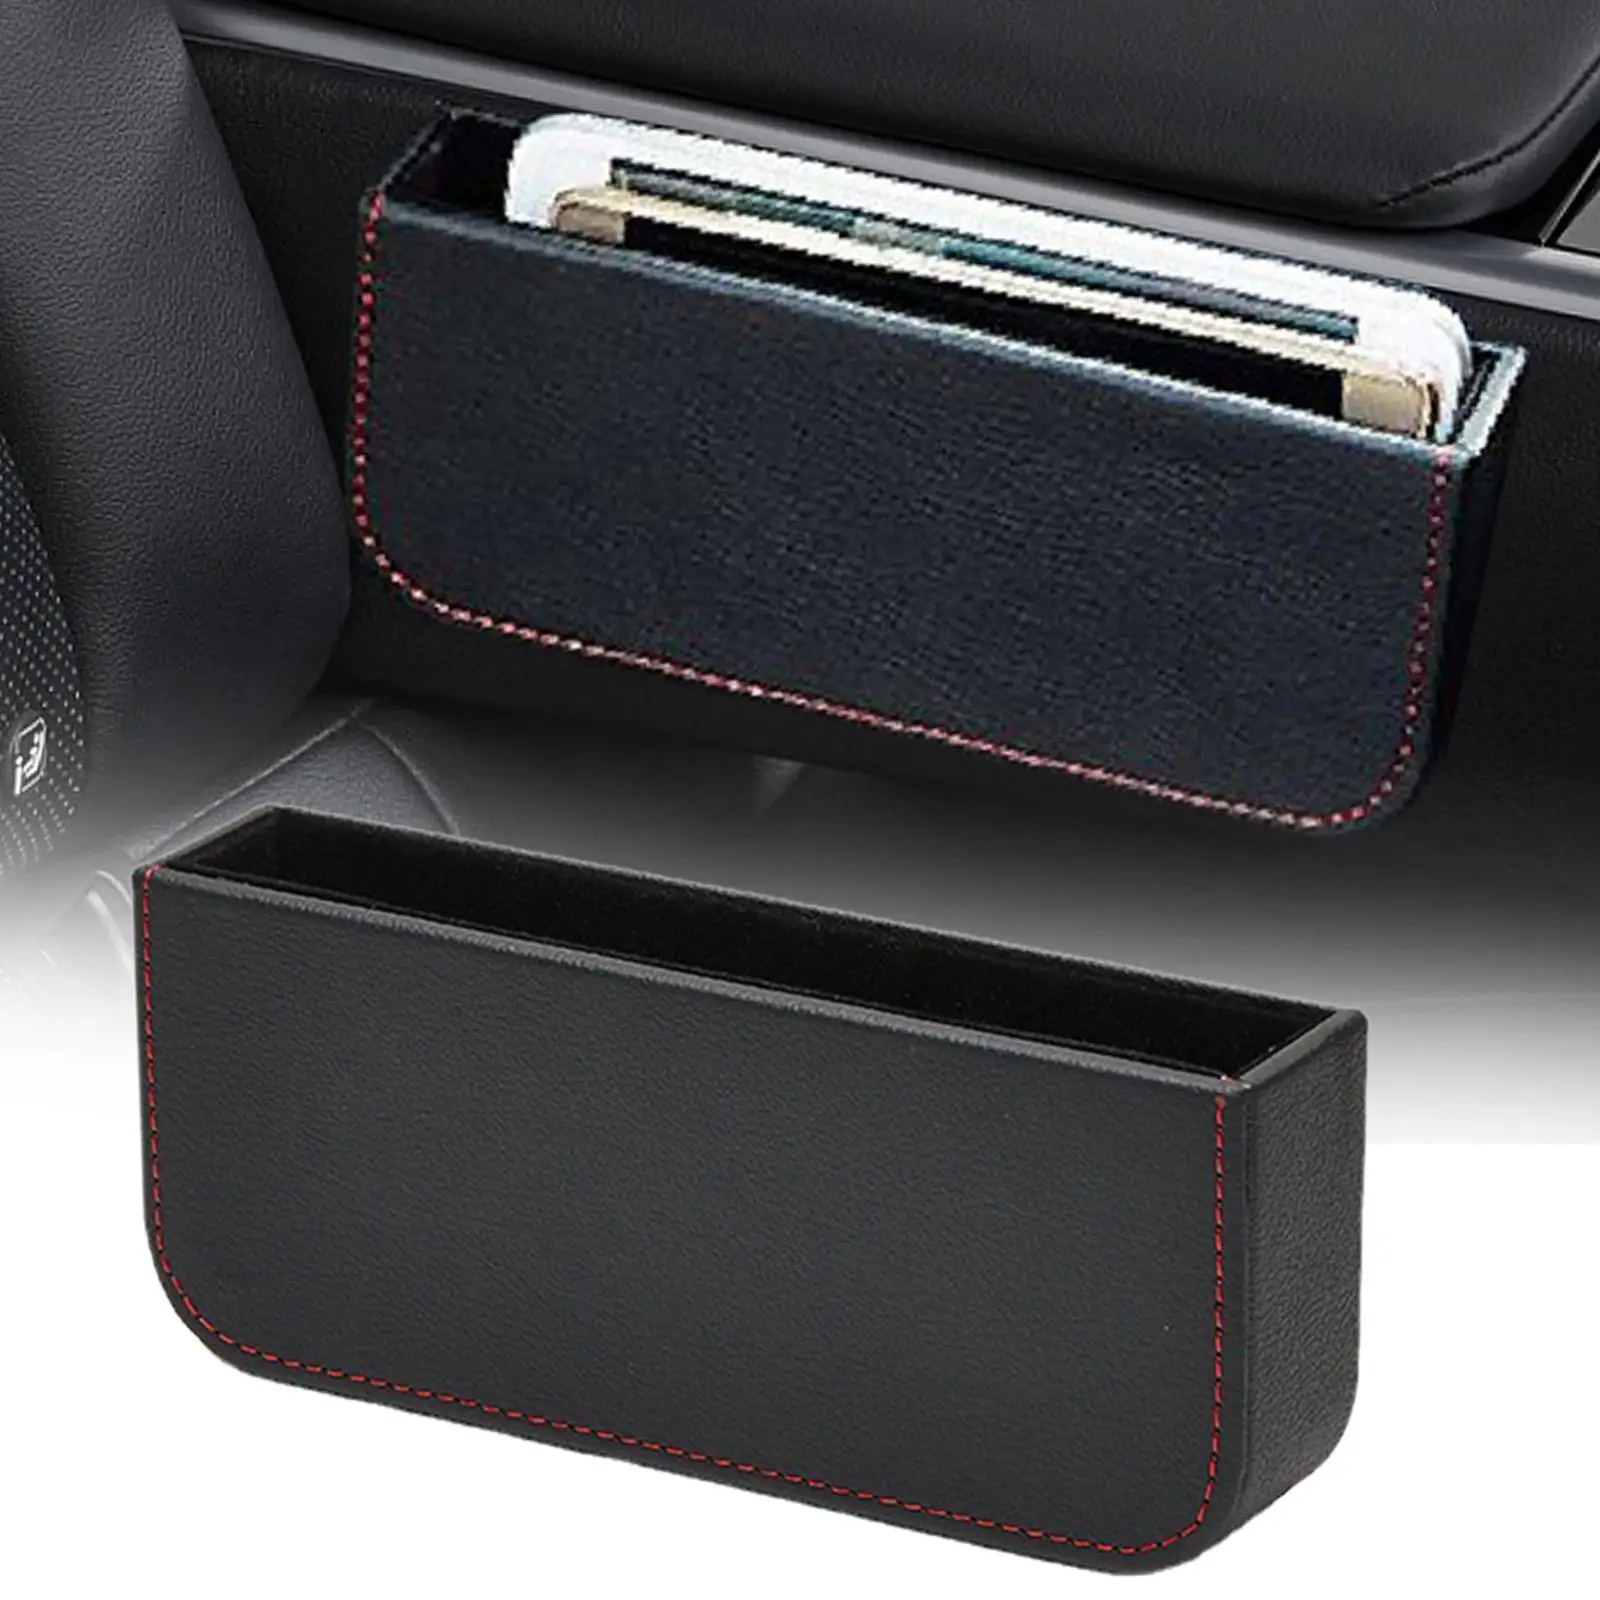 Car Storage Box Space Saving Auto Interior Accessories Tray Organizer Holder for Sundries Keys Small Items Cellphones Pens